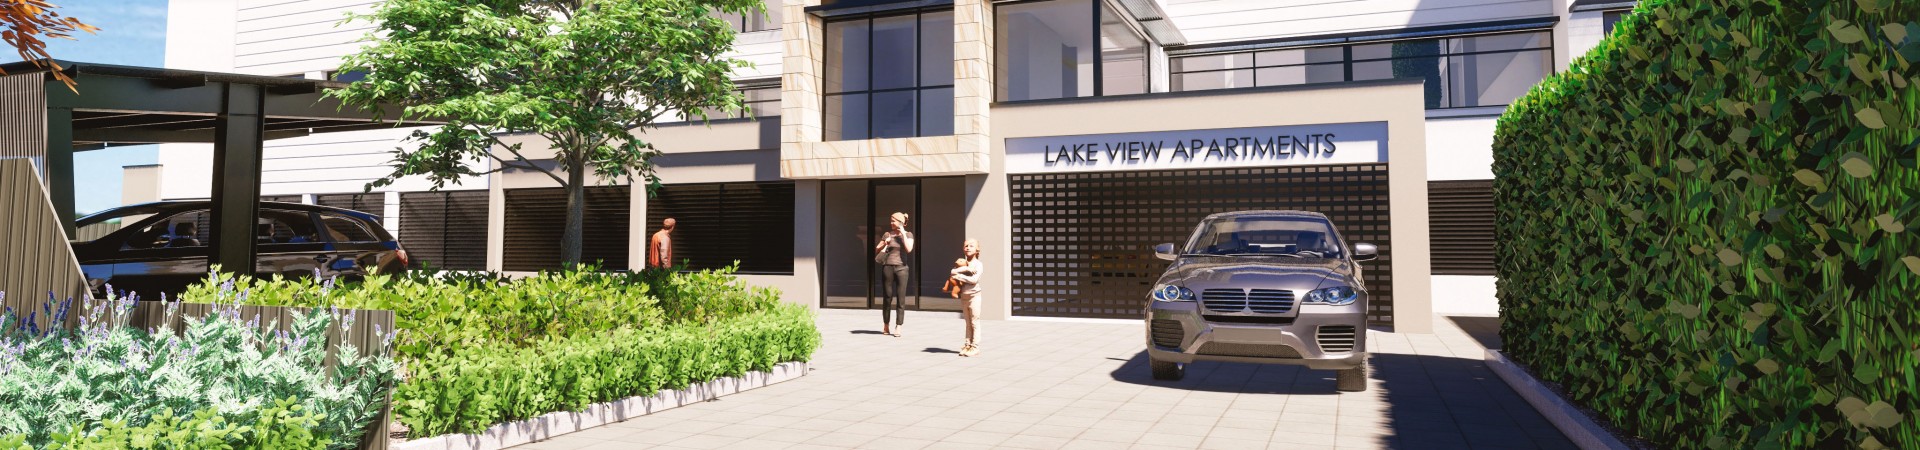 Lakevew Apartments WEST LAKES CORNER Edit westlakesviews rear web edit v2